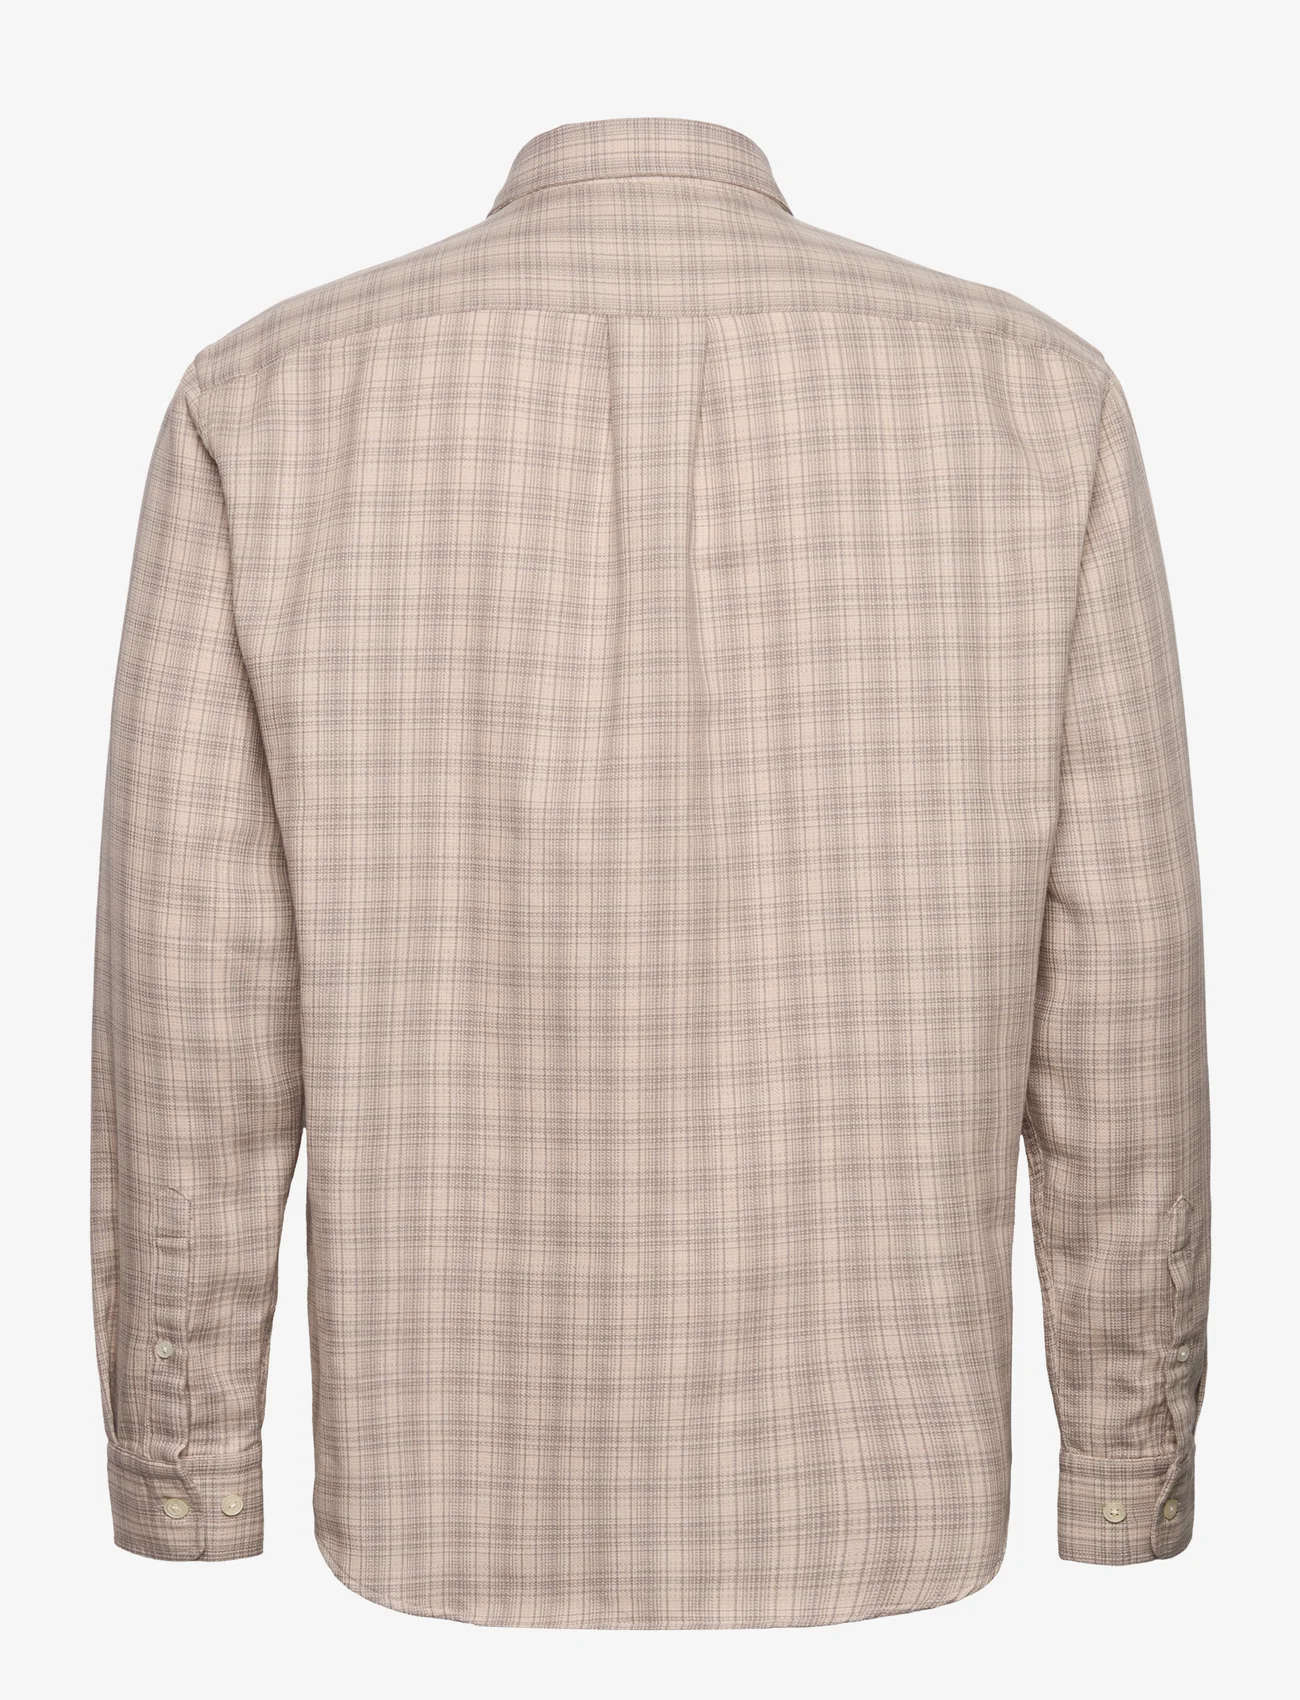 Mads Nørgaard - Summer Cotton Malte Shirt - rutede skjorter - rainy day/vintage khaki - 1